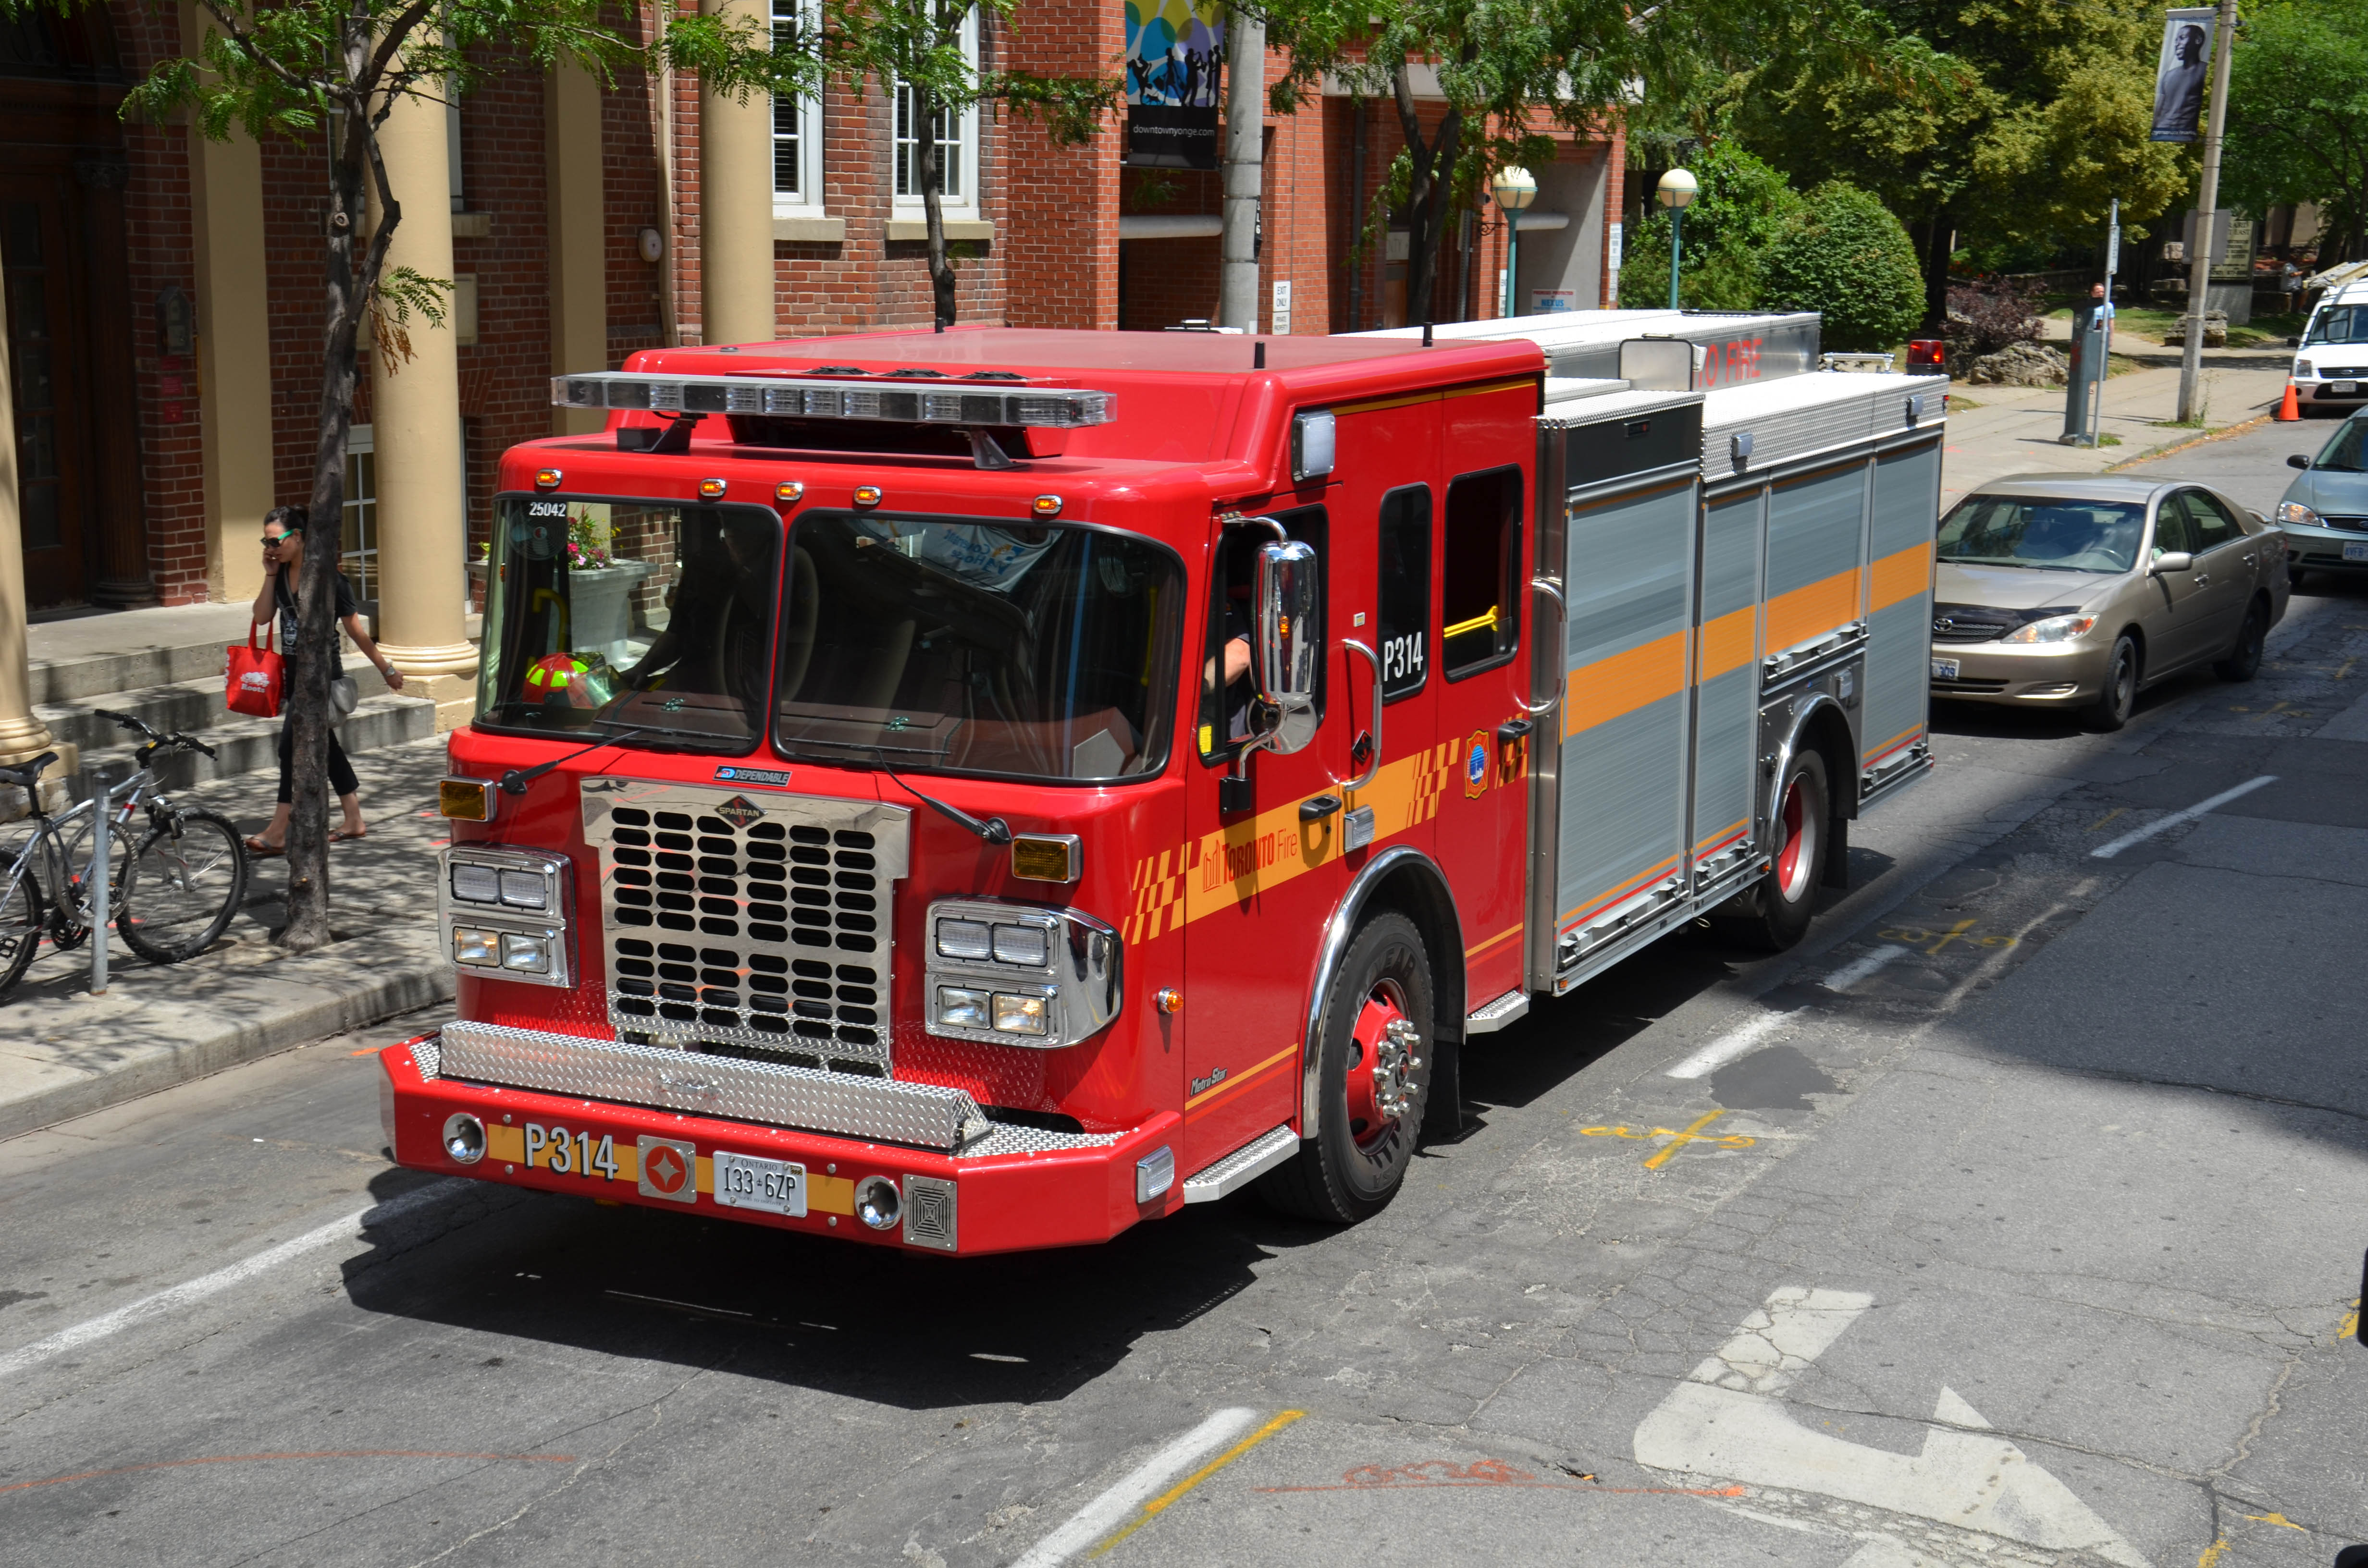 Firefighting apparatus - Wikipedia